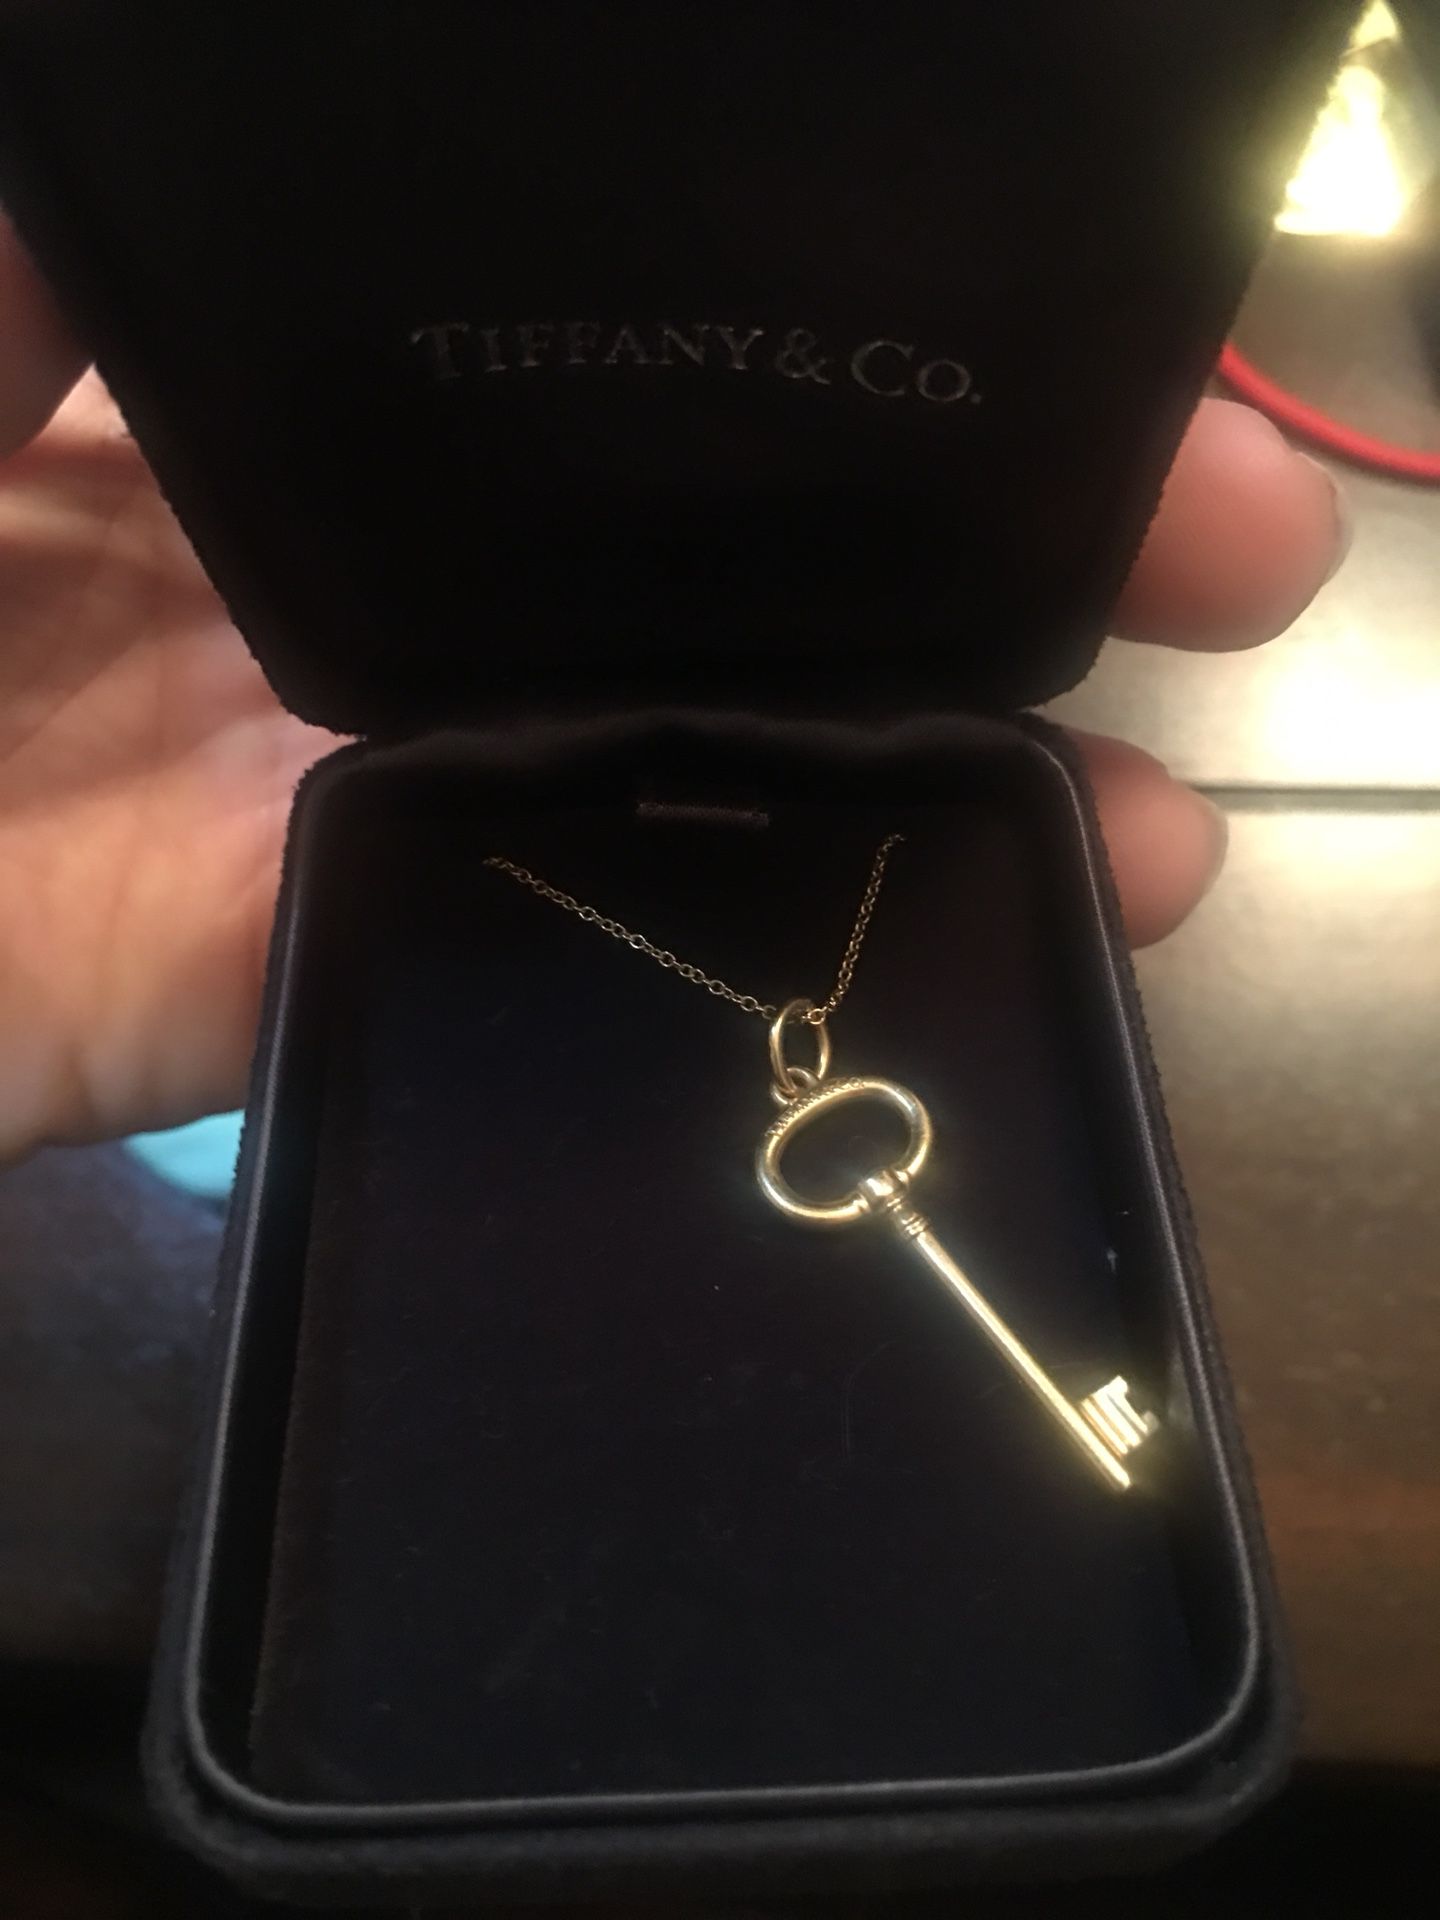 Gold Tiffany & Co key necklace